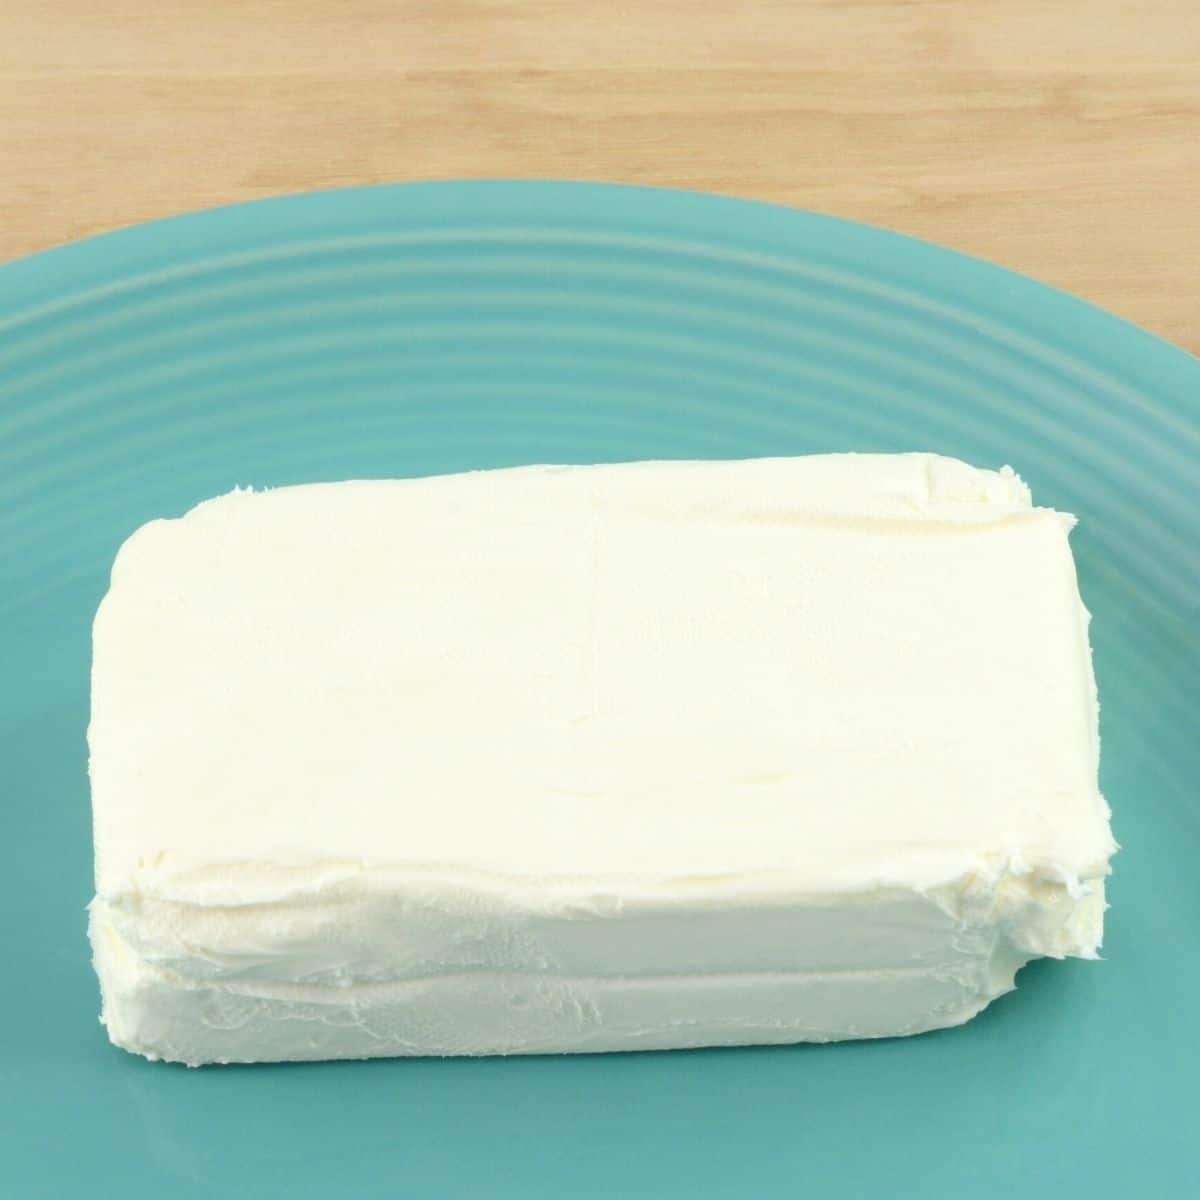 rectangular block of cream cheese on teal blue plate